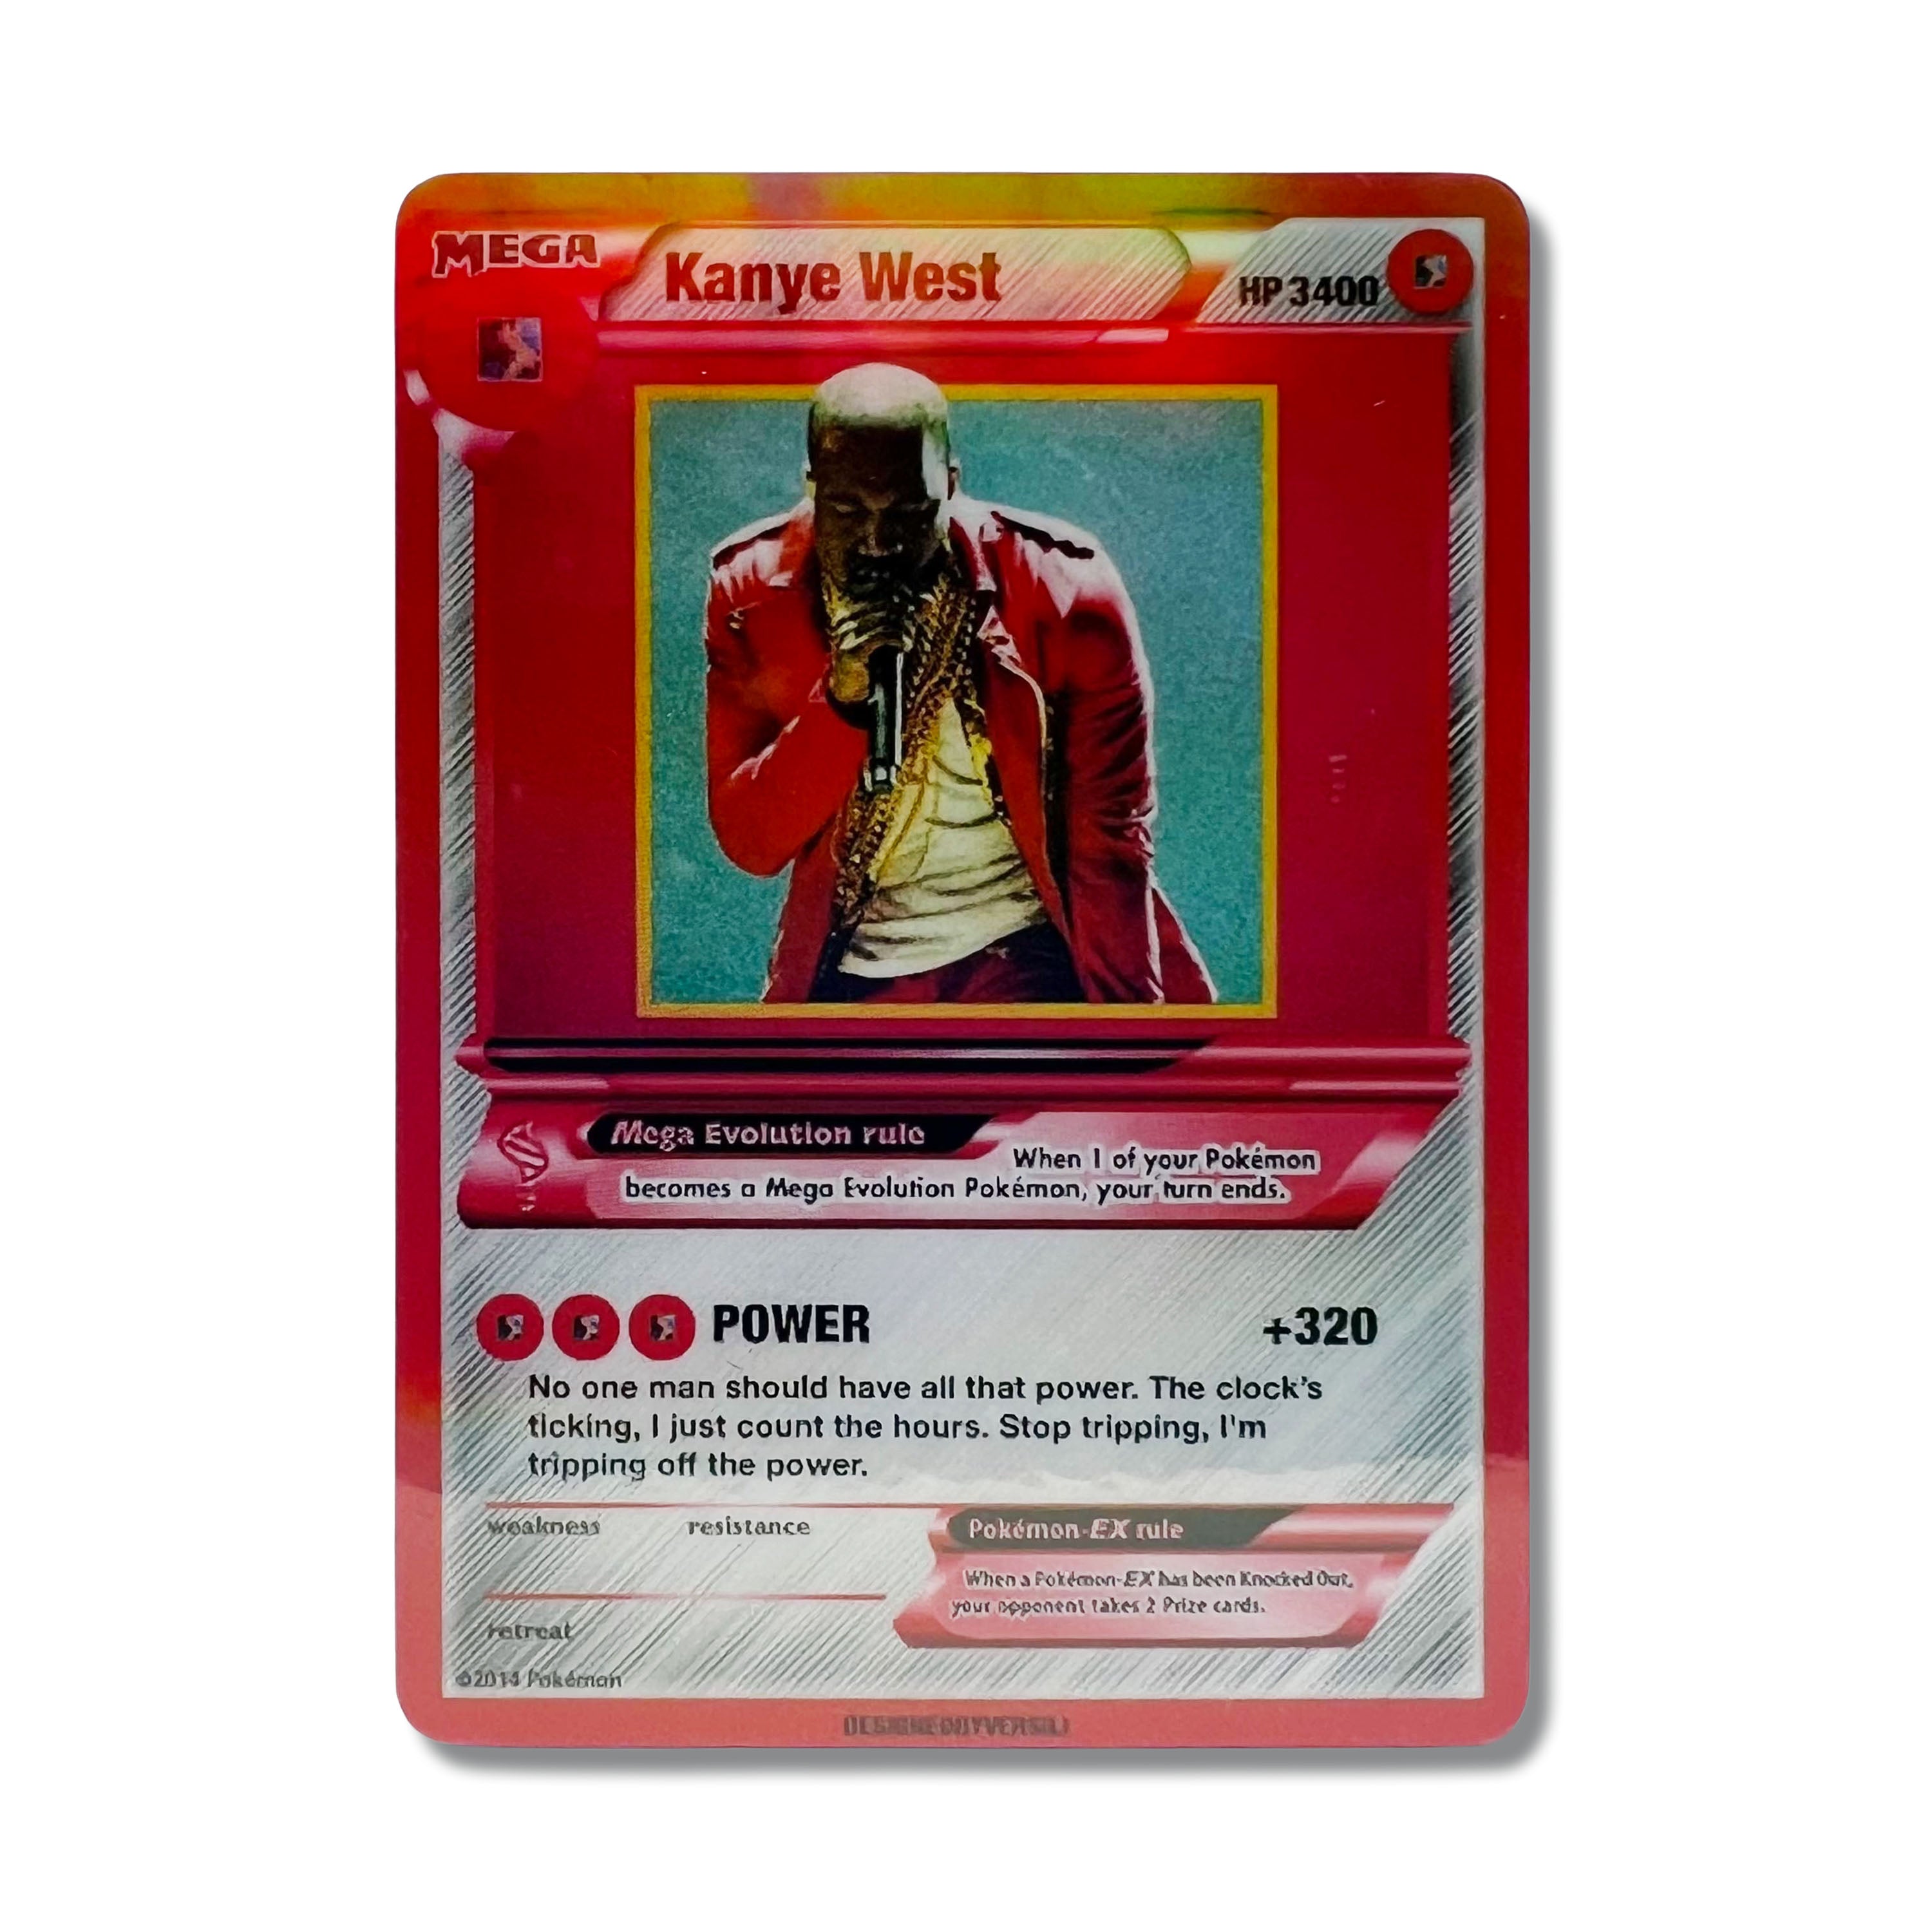 Kanye West Pokémon Card